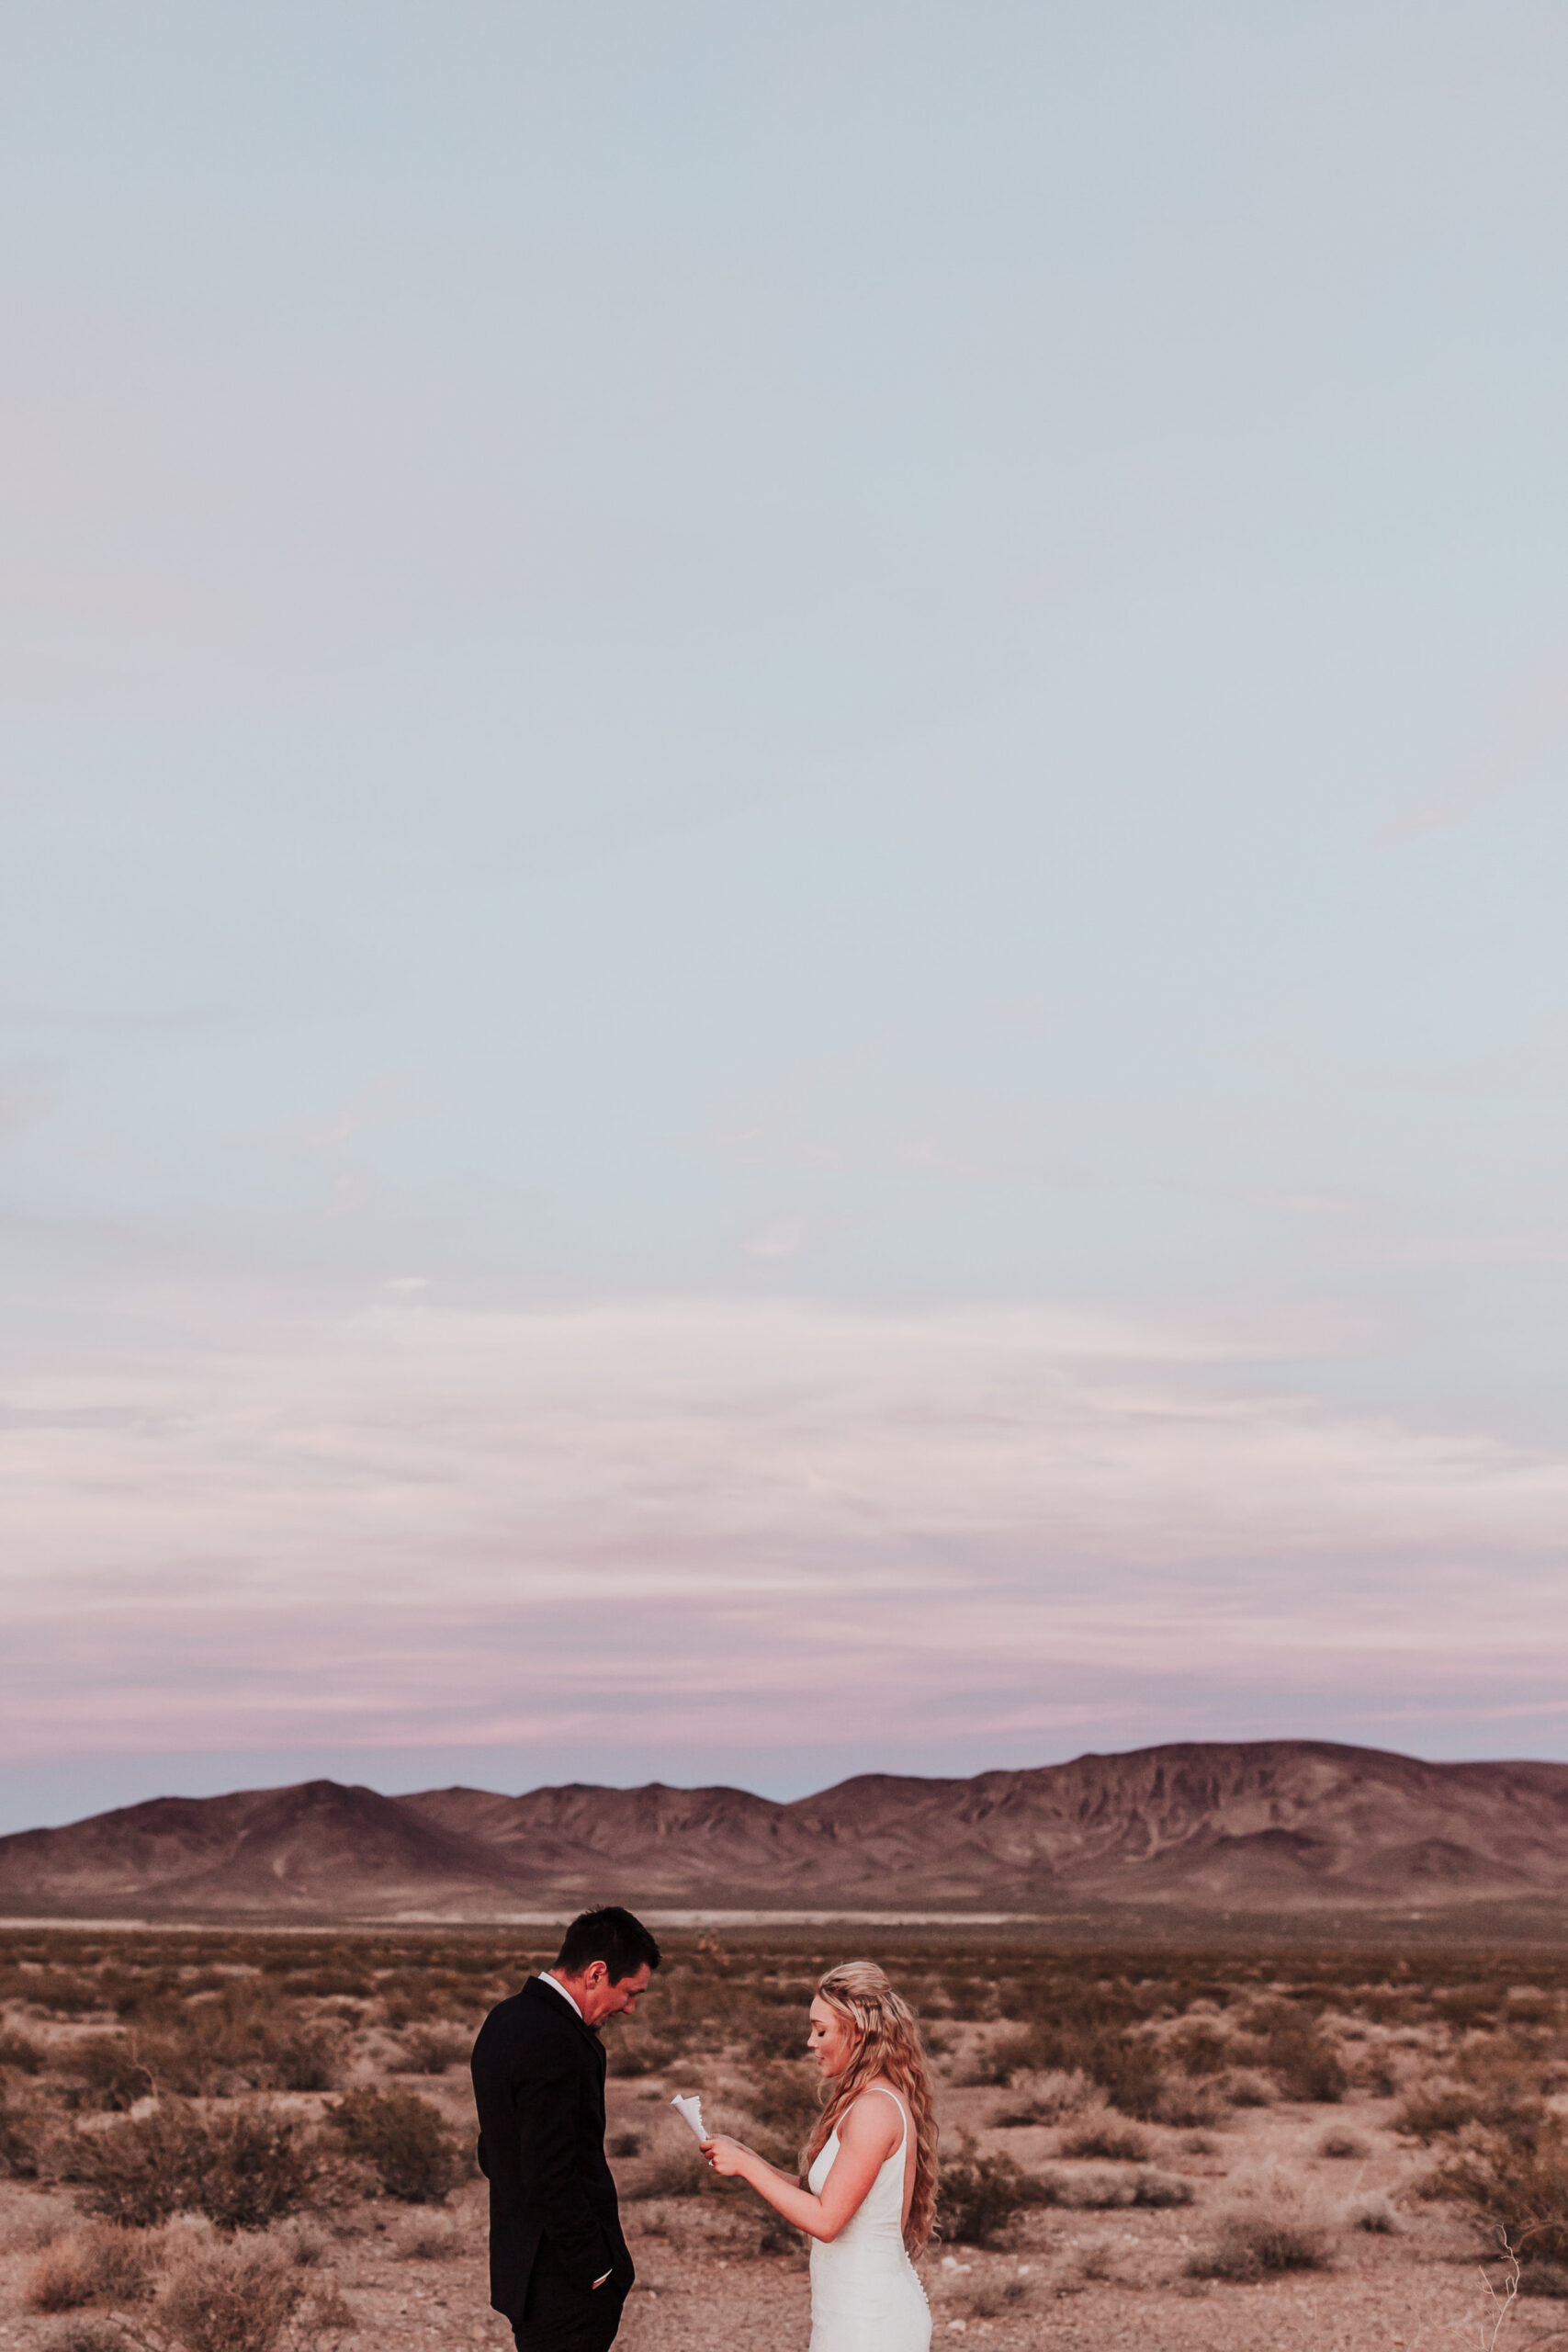 Rustic Bloom Photography | Las Vegas Desert Elopement | Emotional Vows